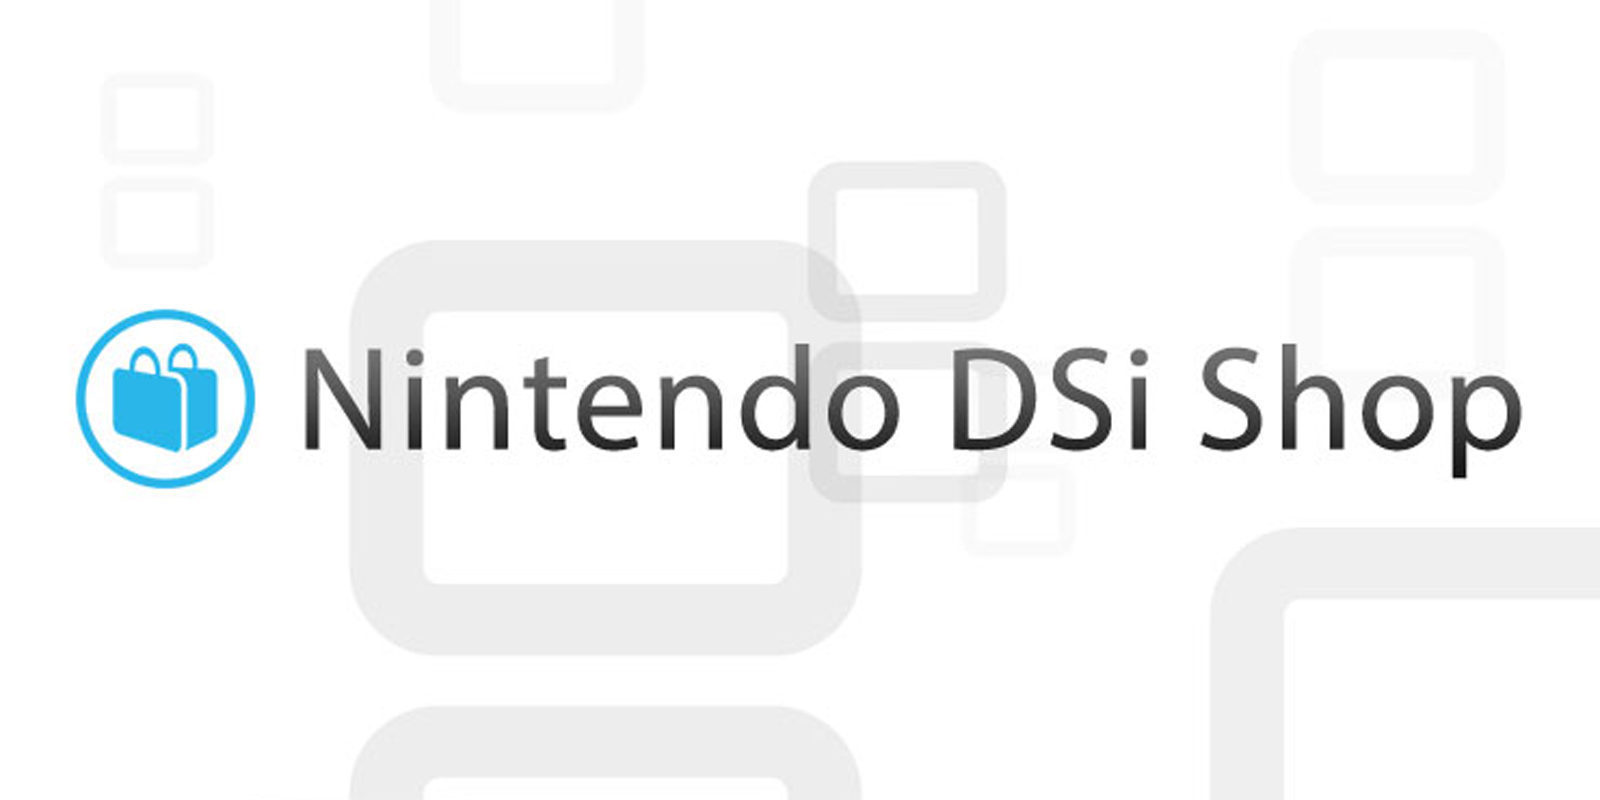 La tienda virtual de Nintendo DSi cerrará esta semana